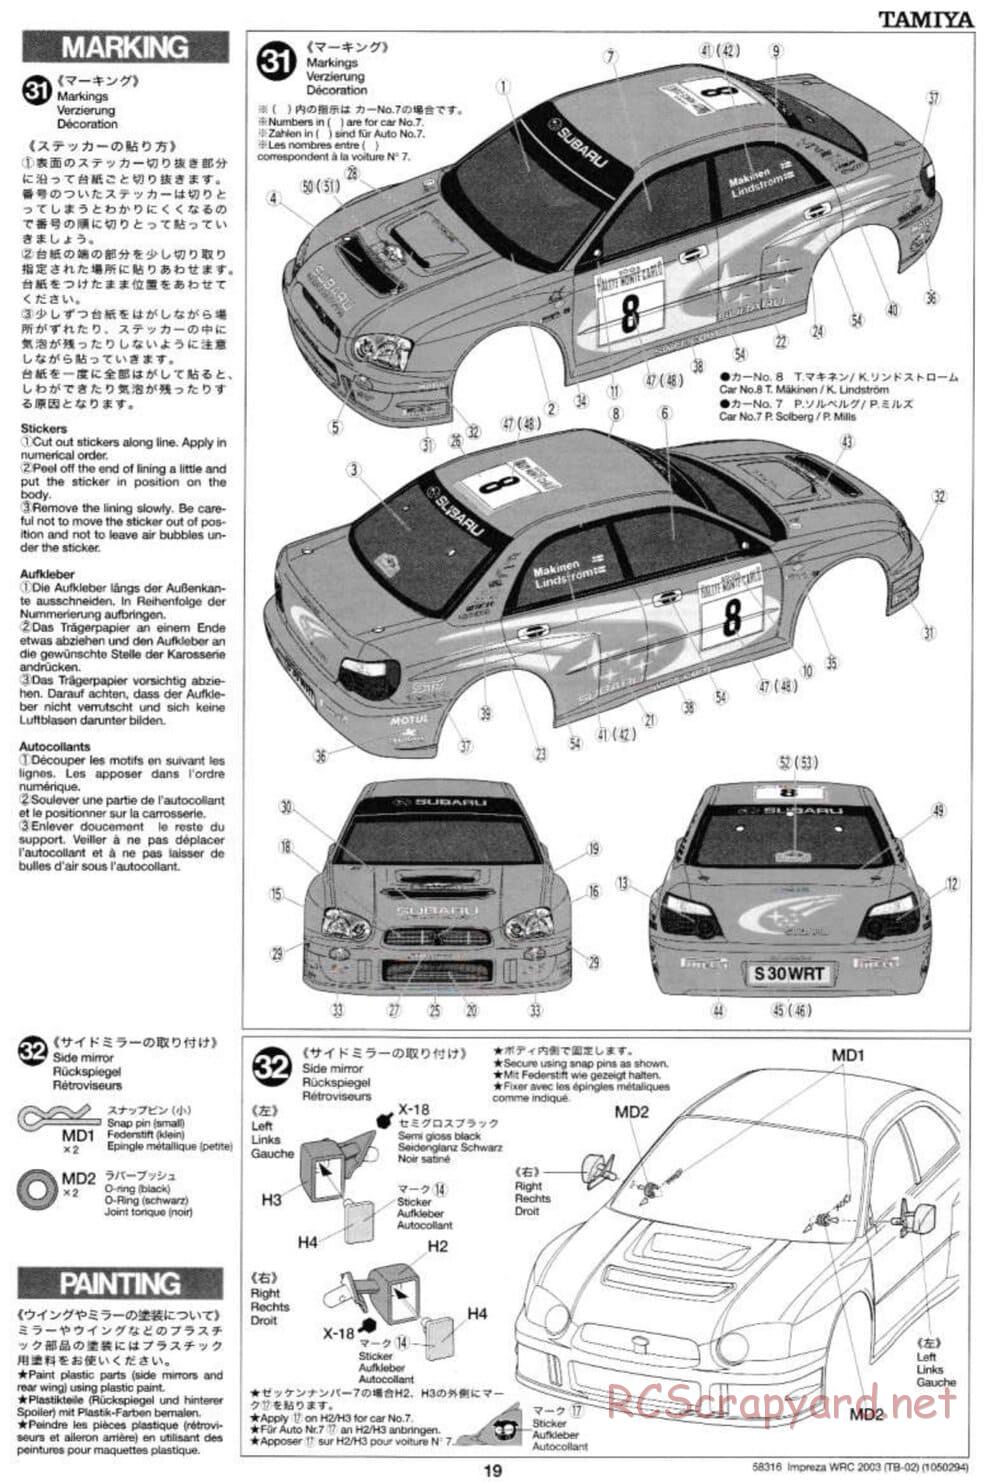 Tamiya - Subaru Impreza WRC 2003 - TB-02 Chassis - Manual - Page 19